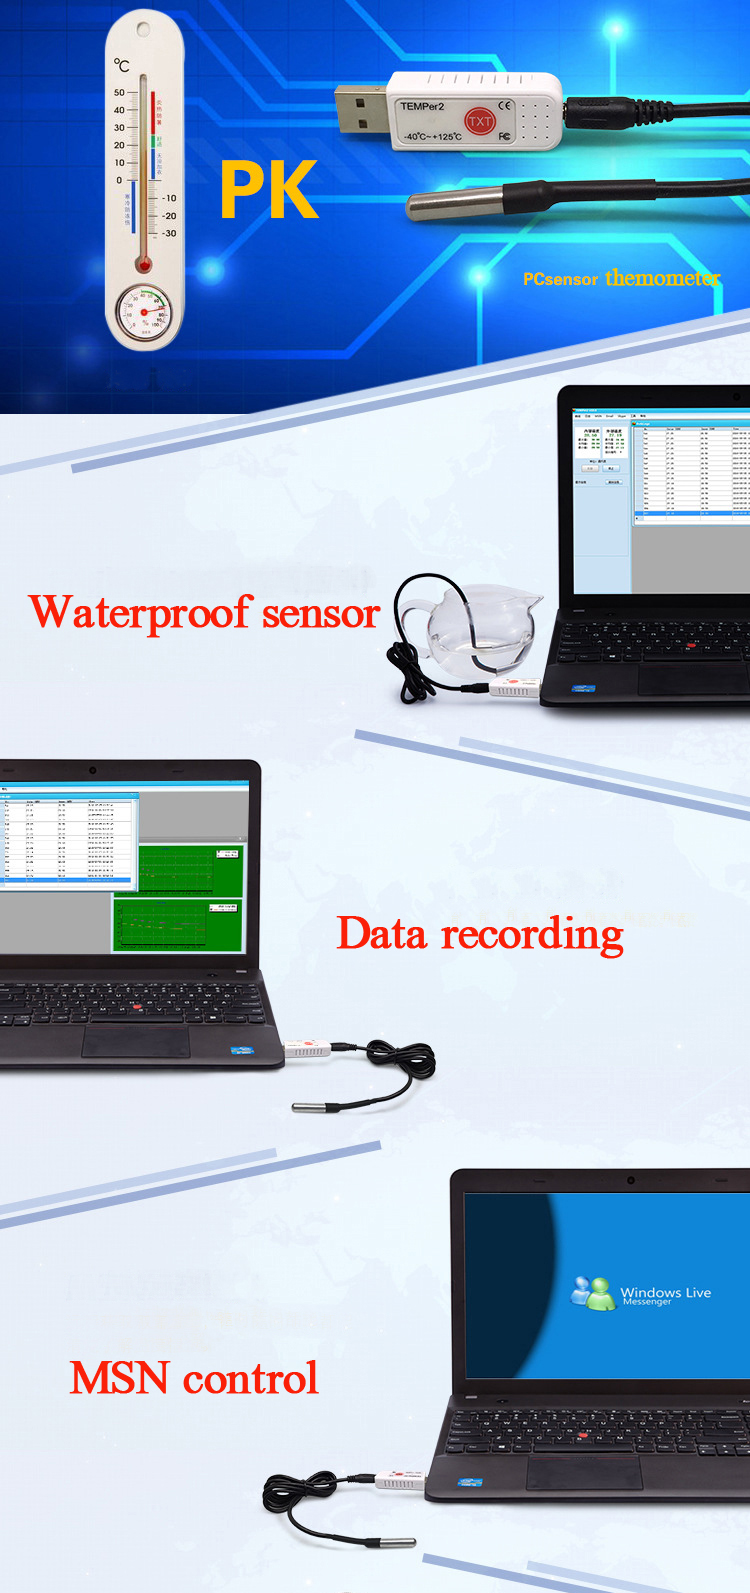 TEMPer2-USB-Thermometer-Temperature-Sensor-Data-Logger-Recorder-For-PC-Laptop-1071096-1